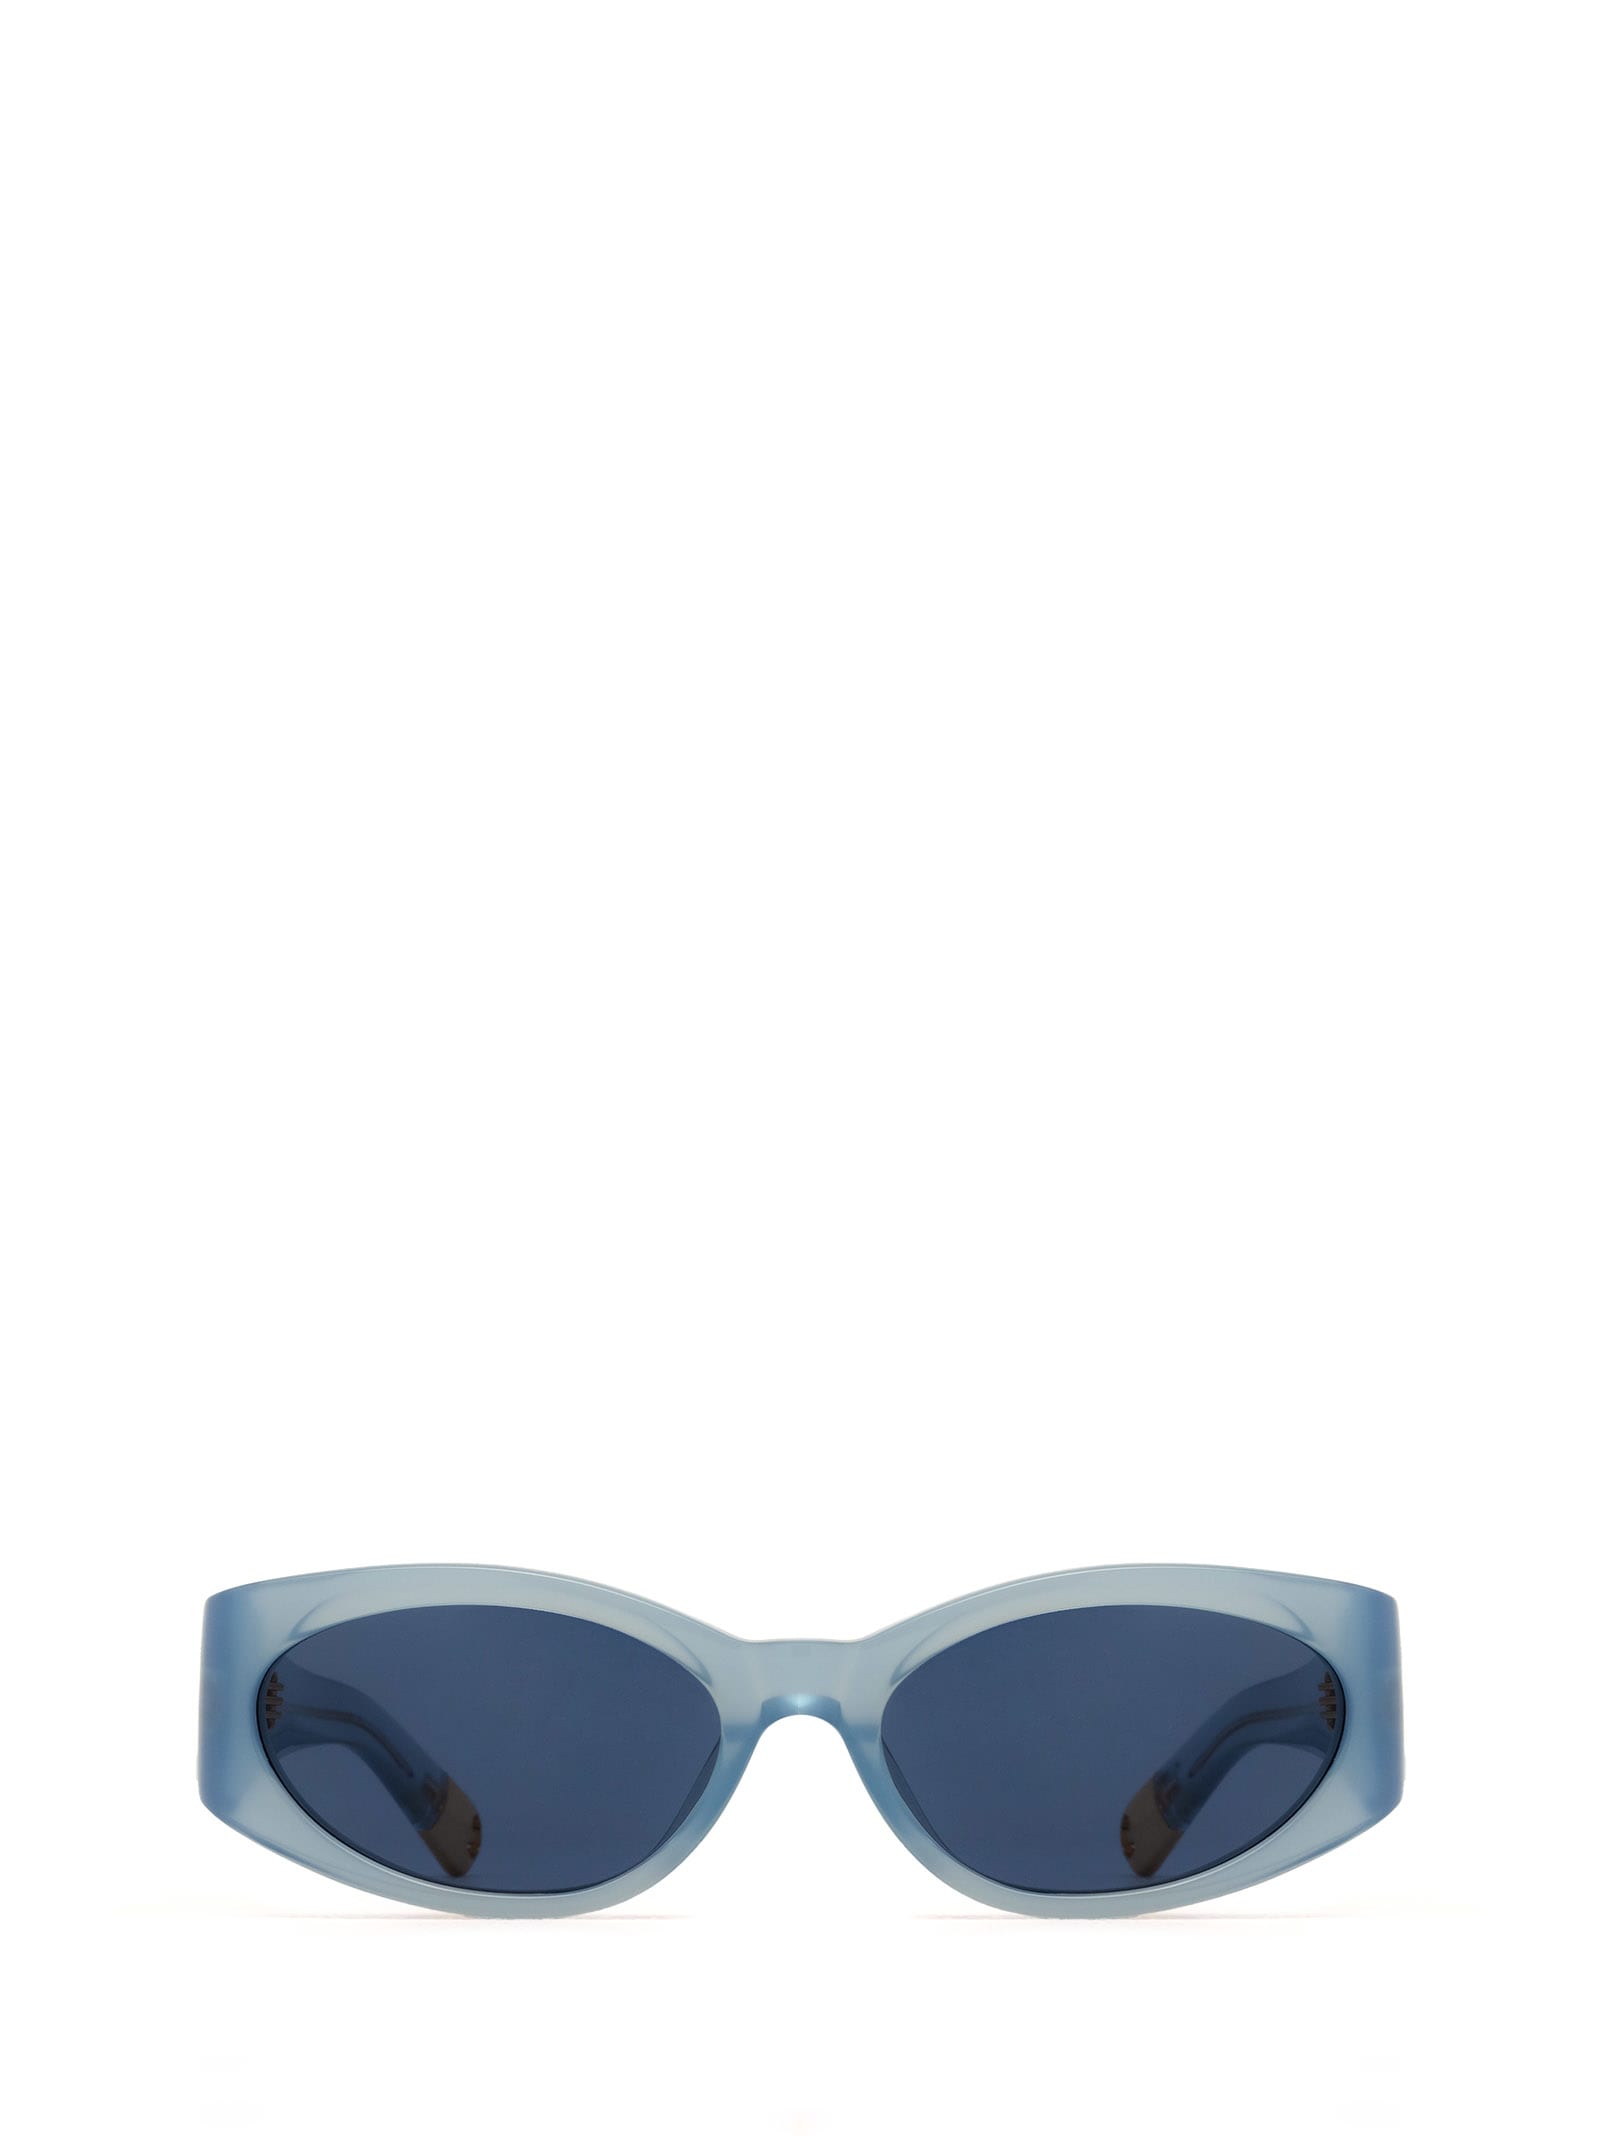 Jac4 Blue Pearl Sunglasses